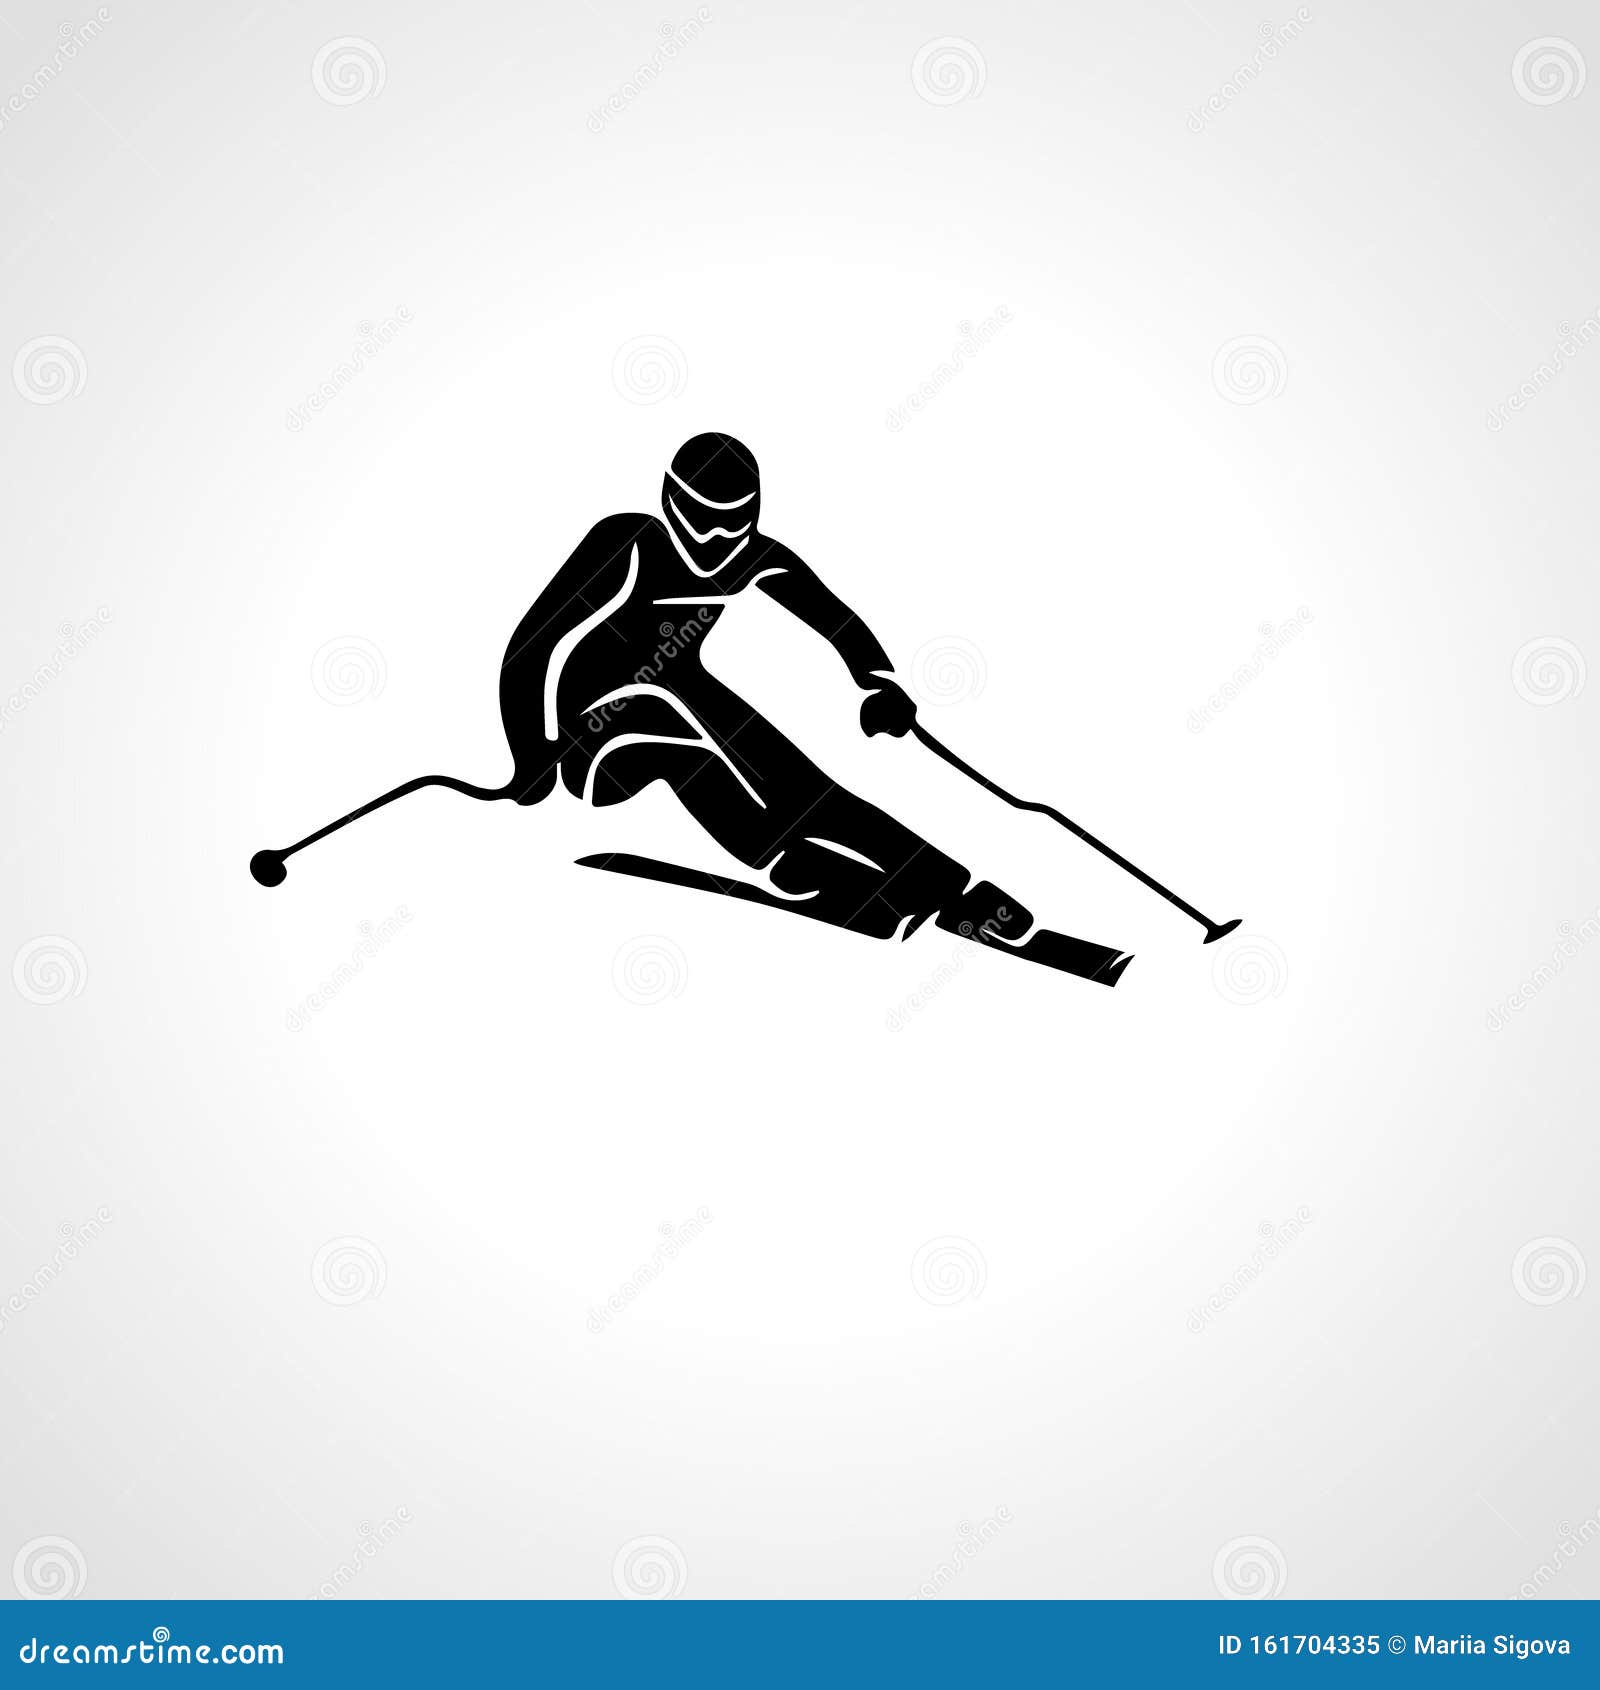 giant slalom ski racer silhouette.  